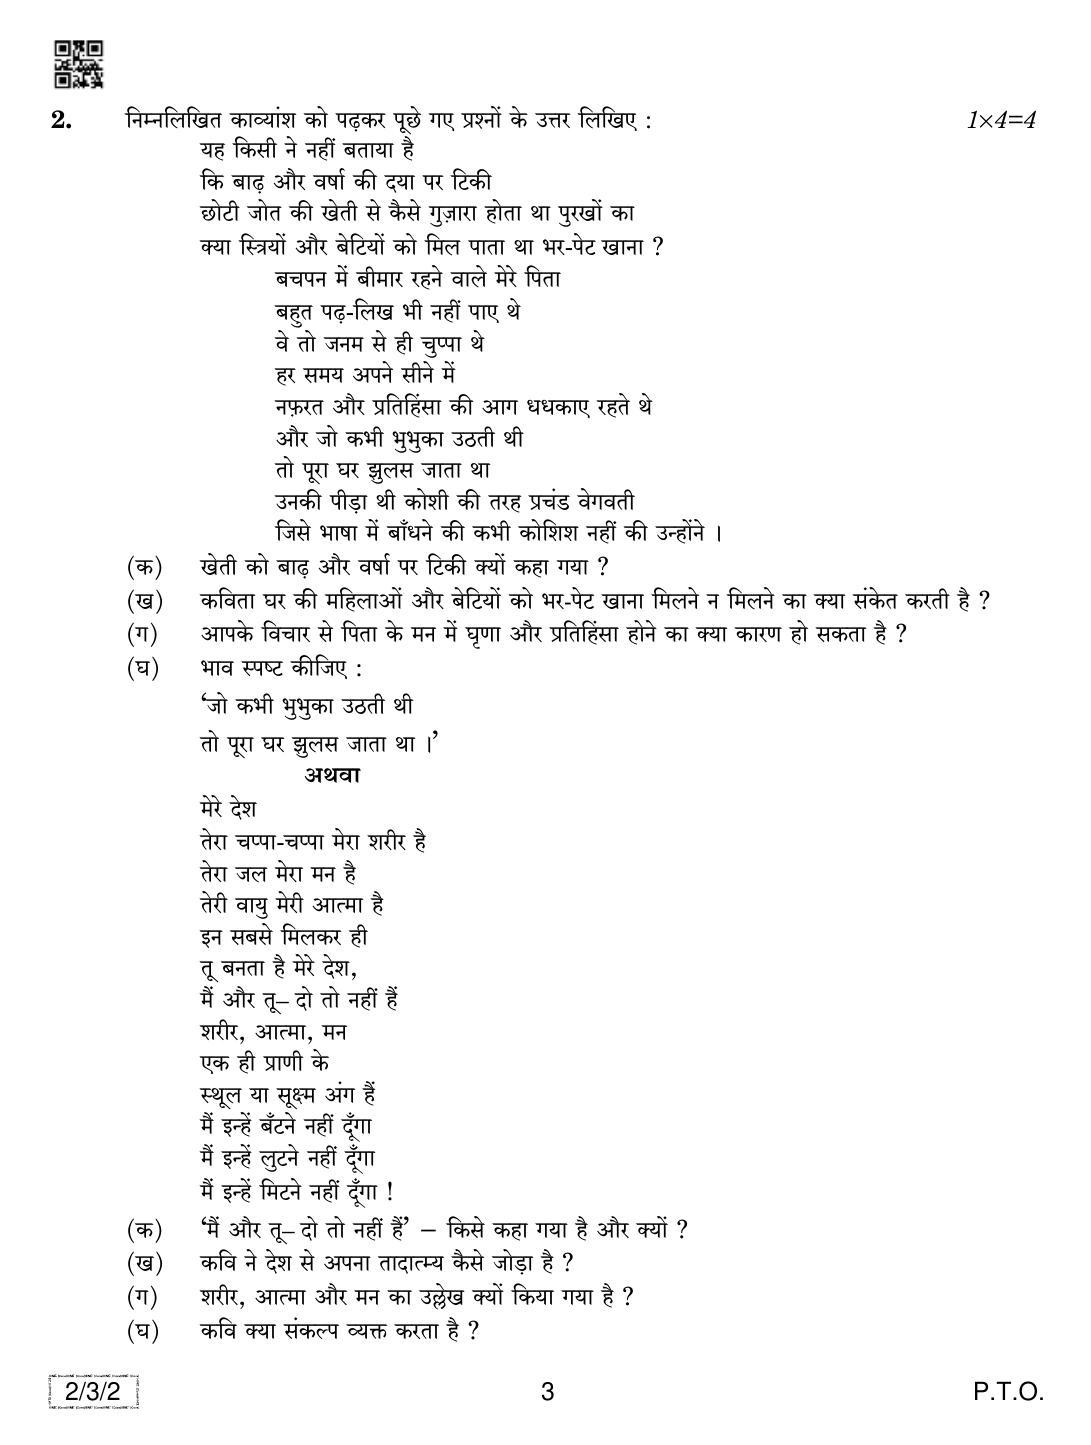 CBSE Class 12 2-3-2 Hindi Core 2019 Question Paper - Page 3